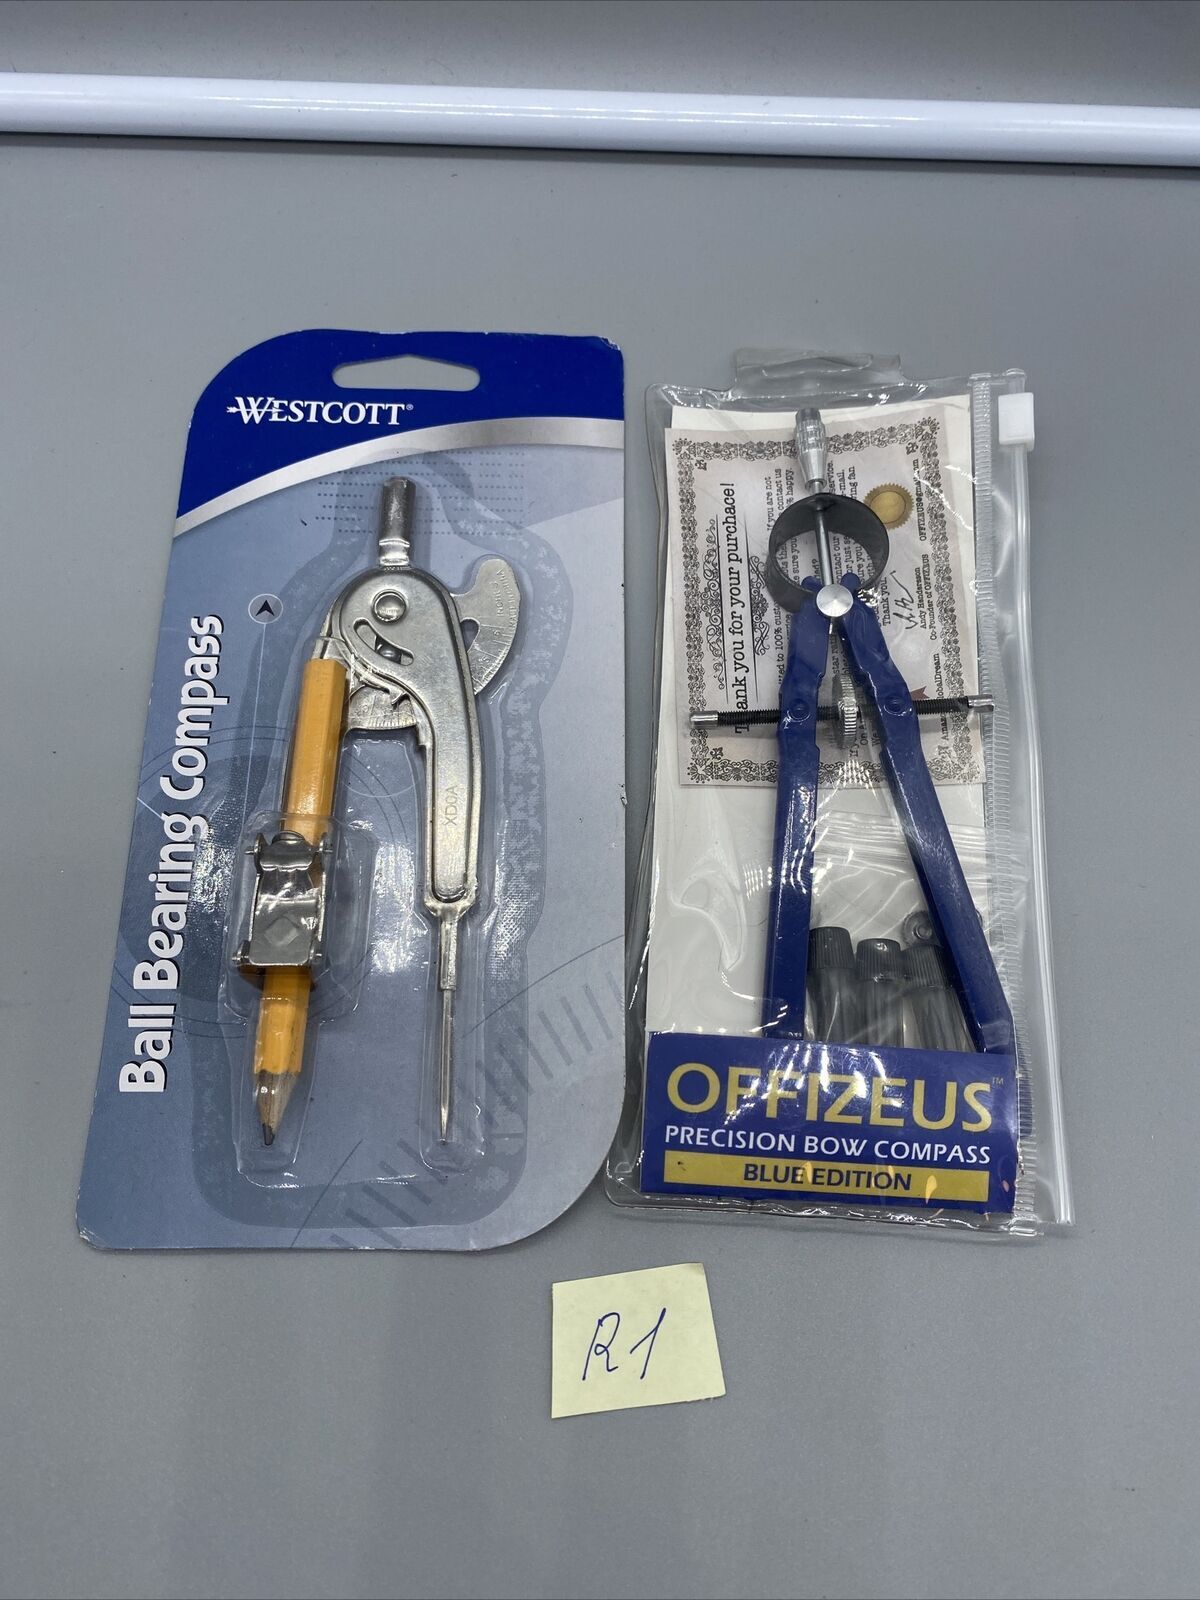 Offizeus Precision Now Compass Blue Edition W/Extra Lead Refills+ Westcott Ball